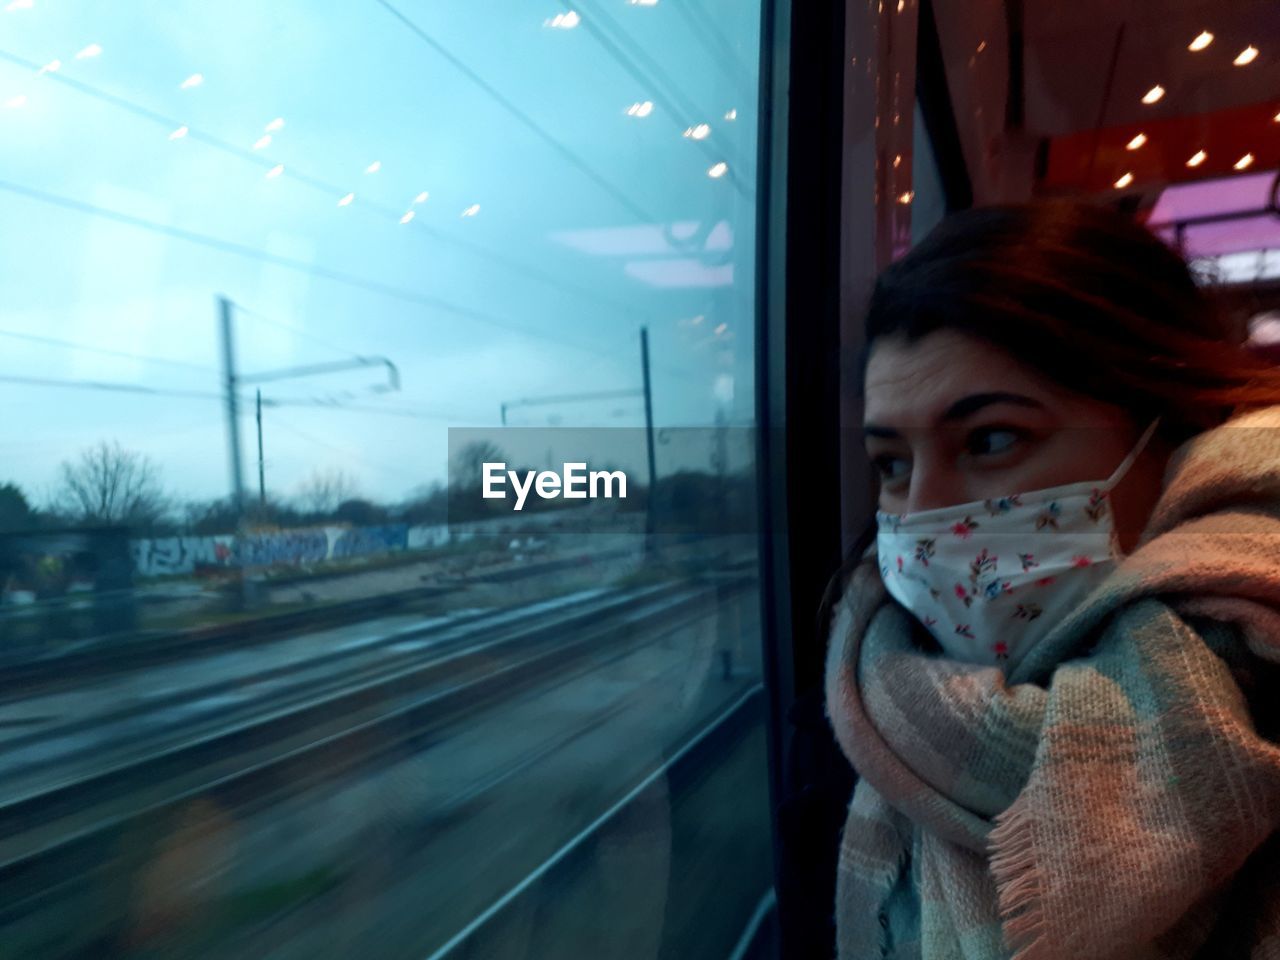 Woman looking away through train window